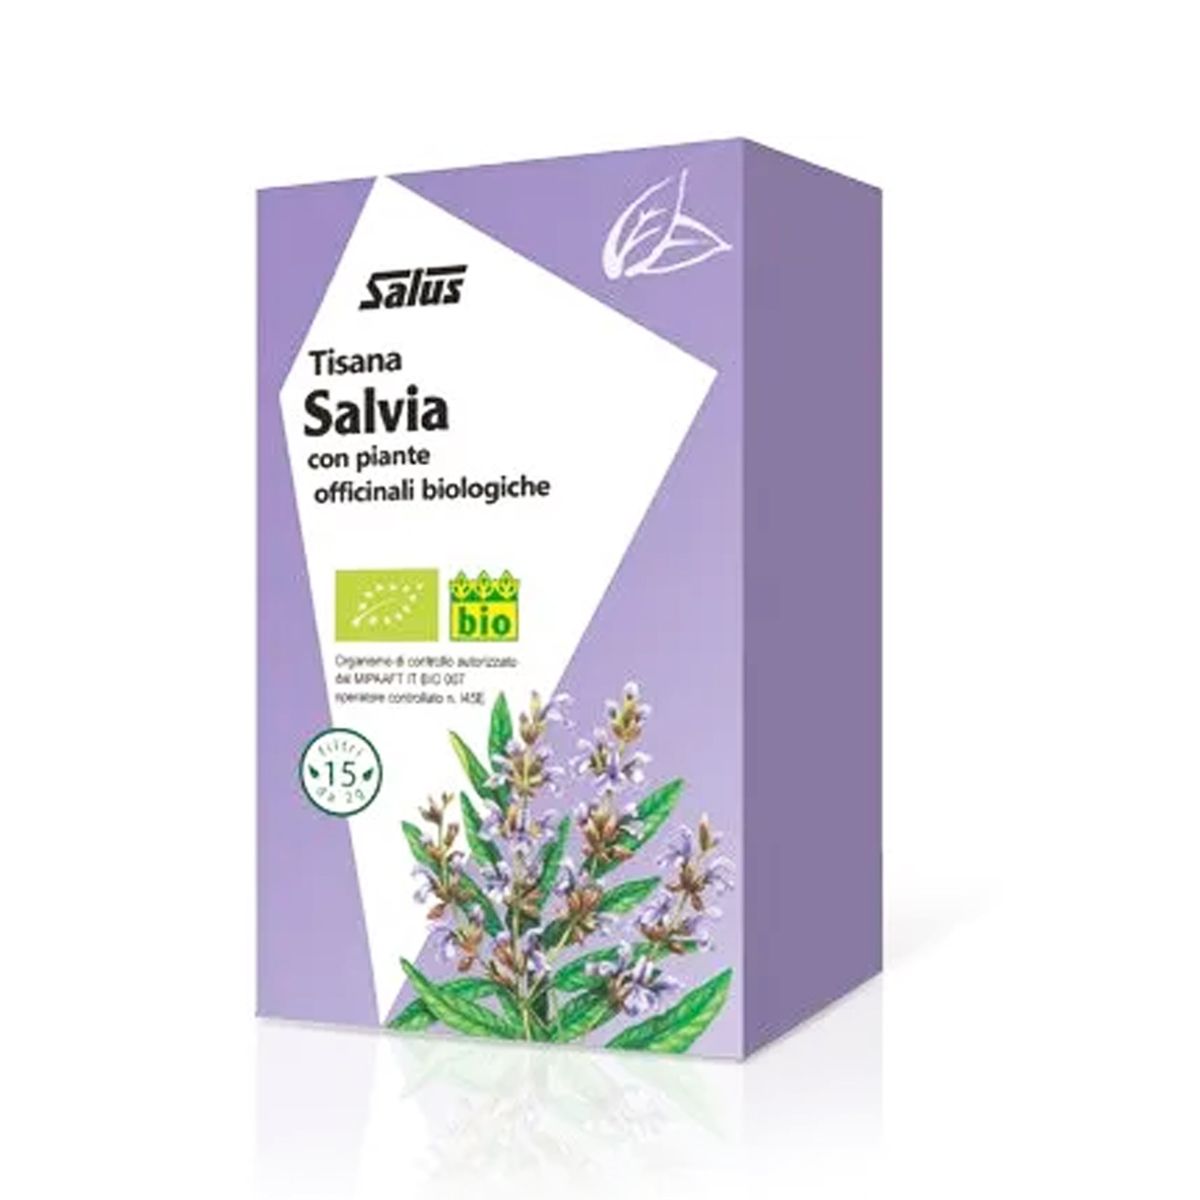 Salus Haus Salvia Tisana Antinfiammatoria Digestiva 15 Filtri Bio